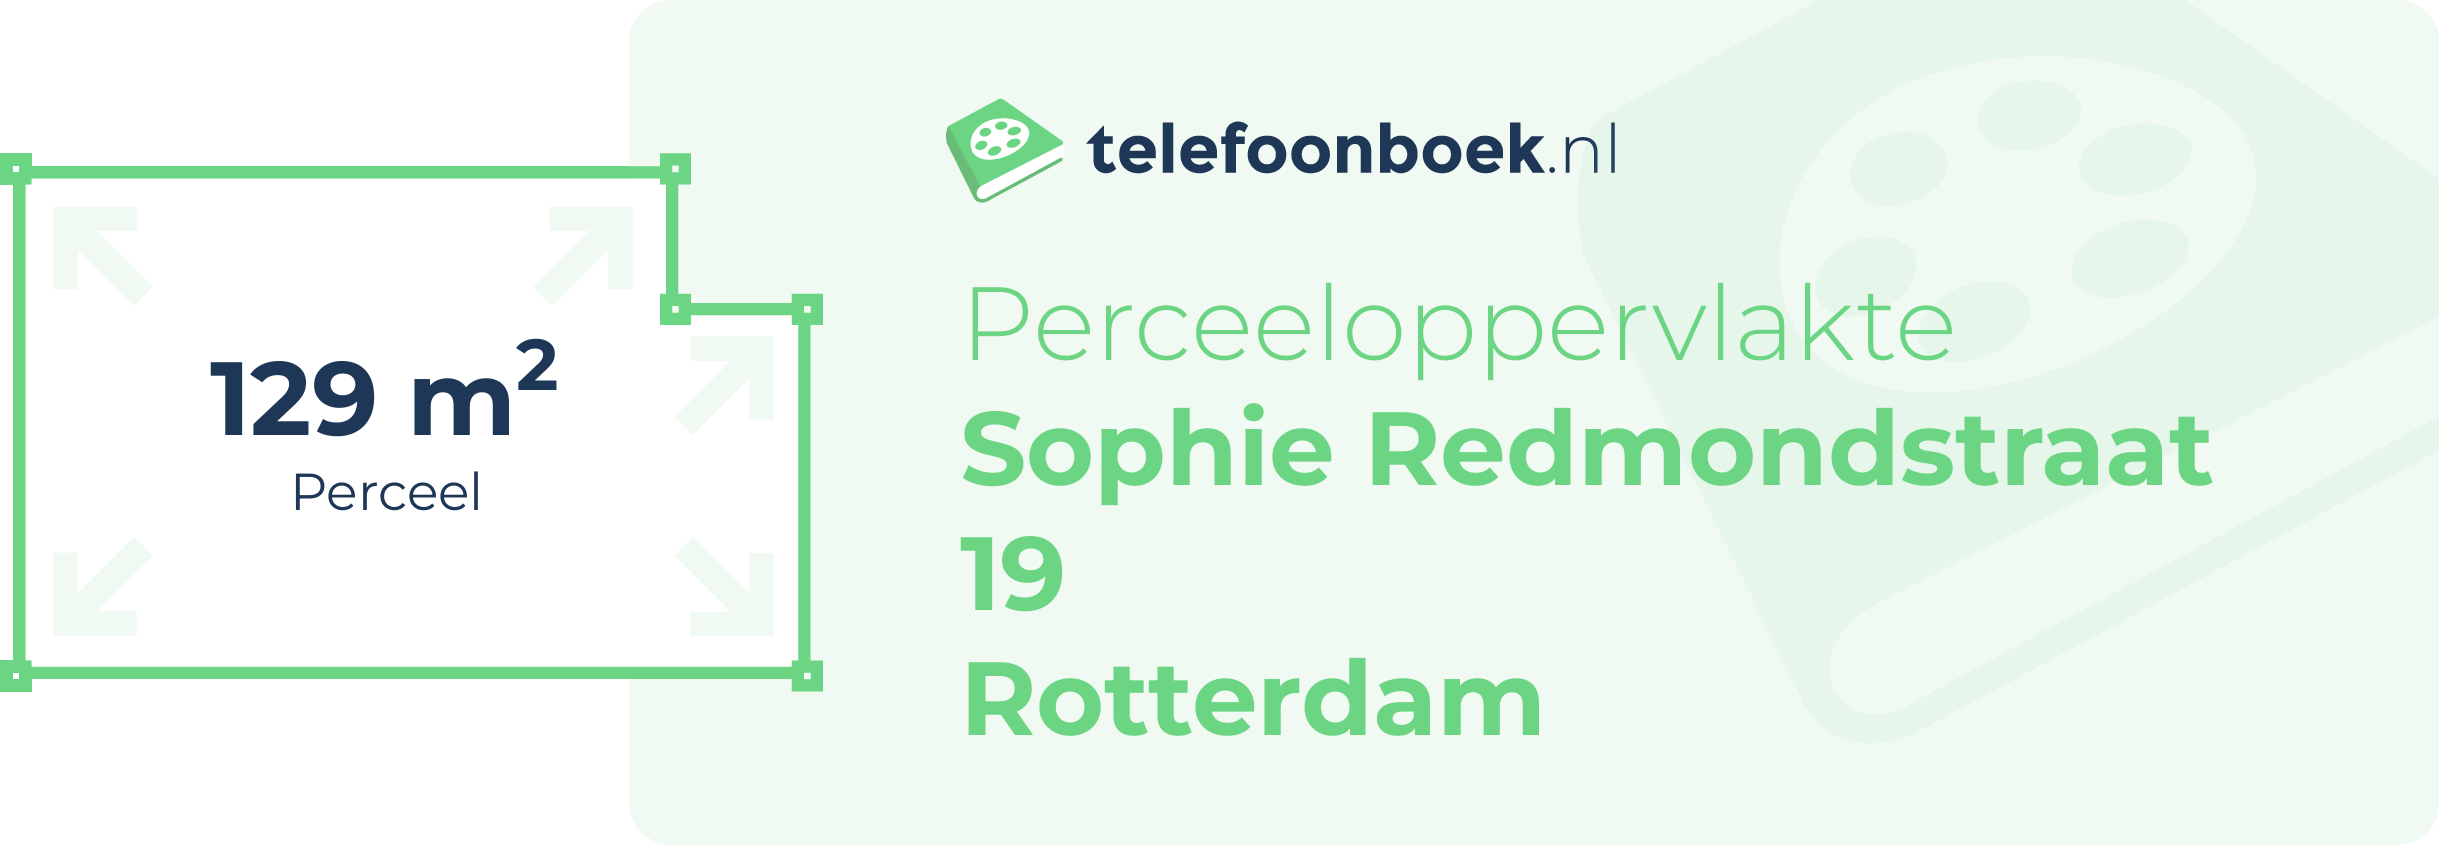 Perceeloppervlakte Sophie Redmondstraat 19 Rotterdam